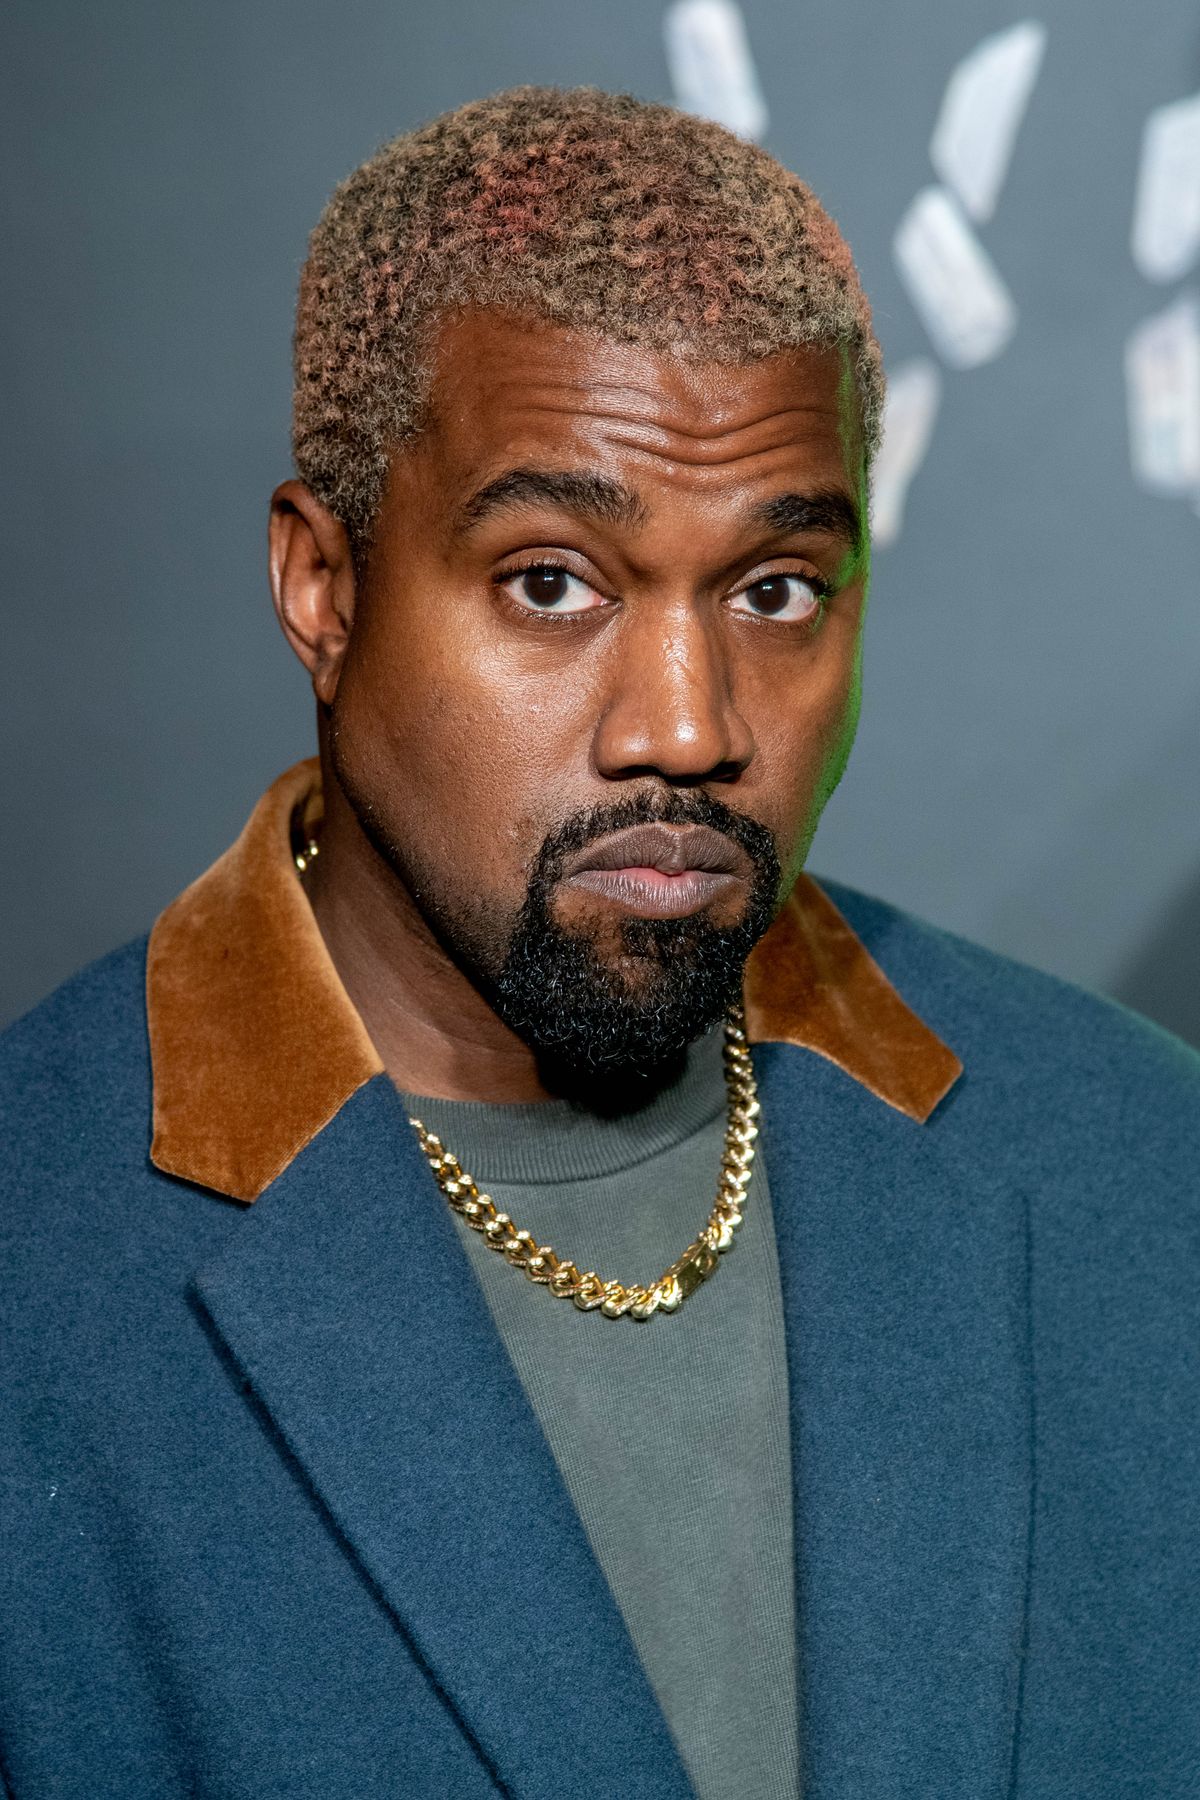 Kanye West - Wikipedia